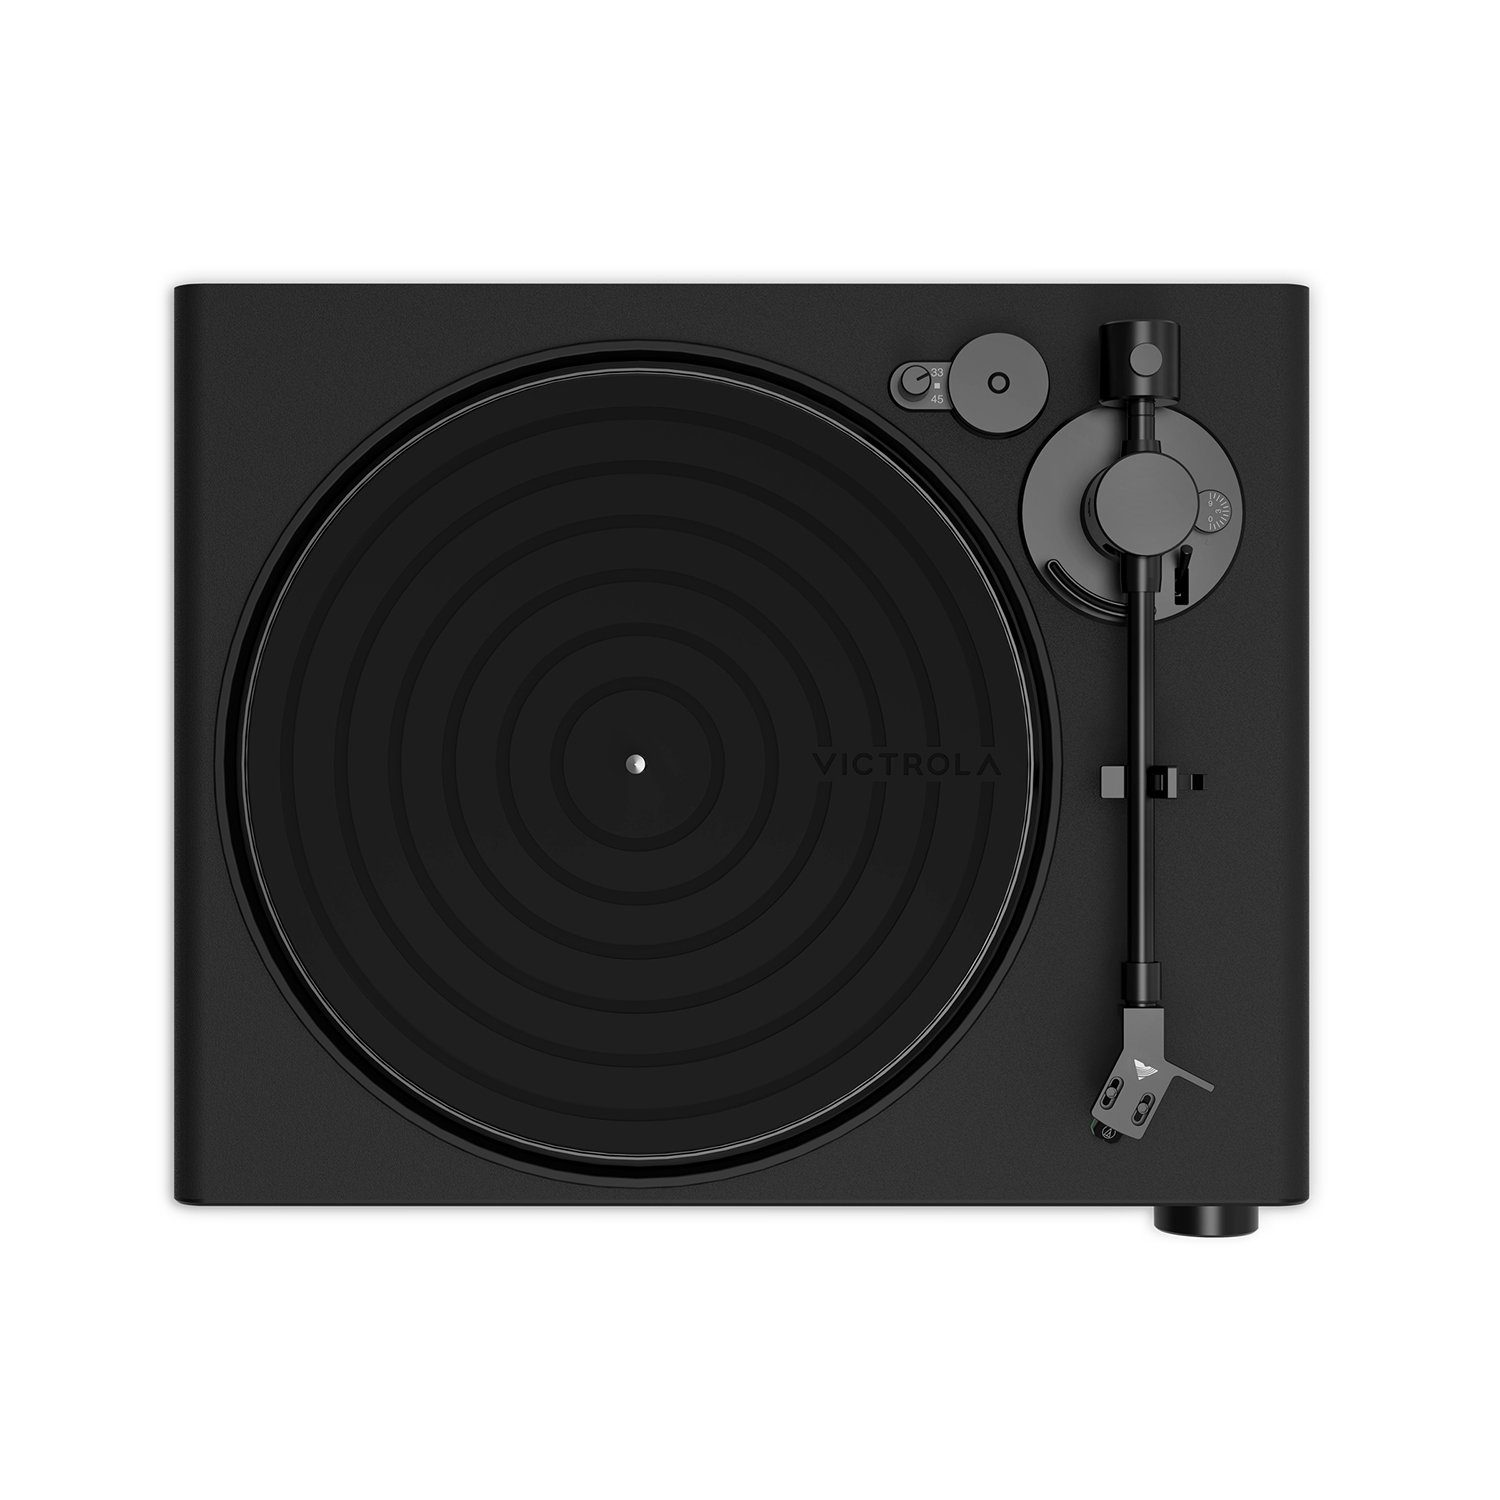 Victrola Plattenspieler Victrola Stream WIRELESS) (Riemenantrieb, Onyx